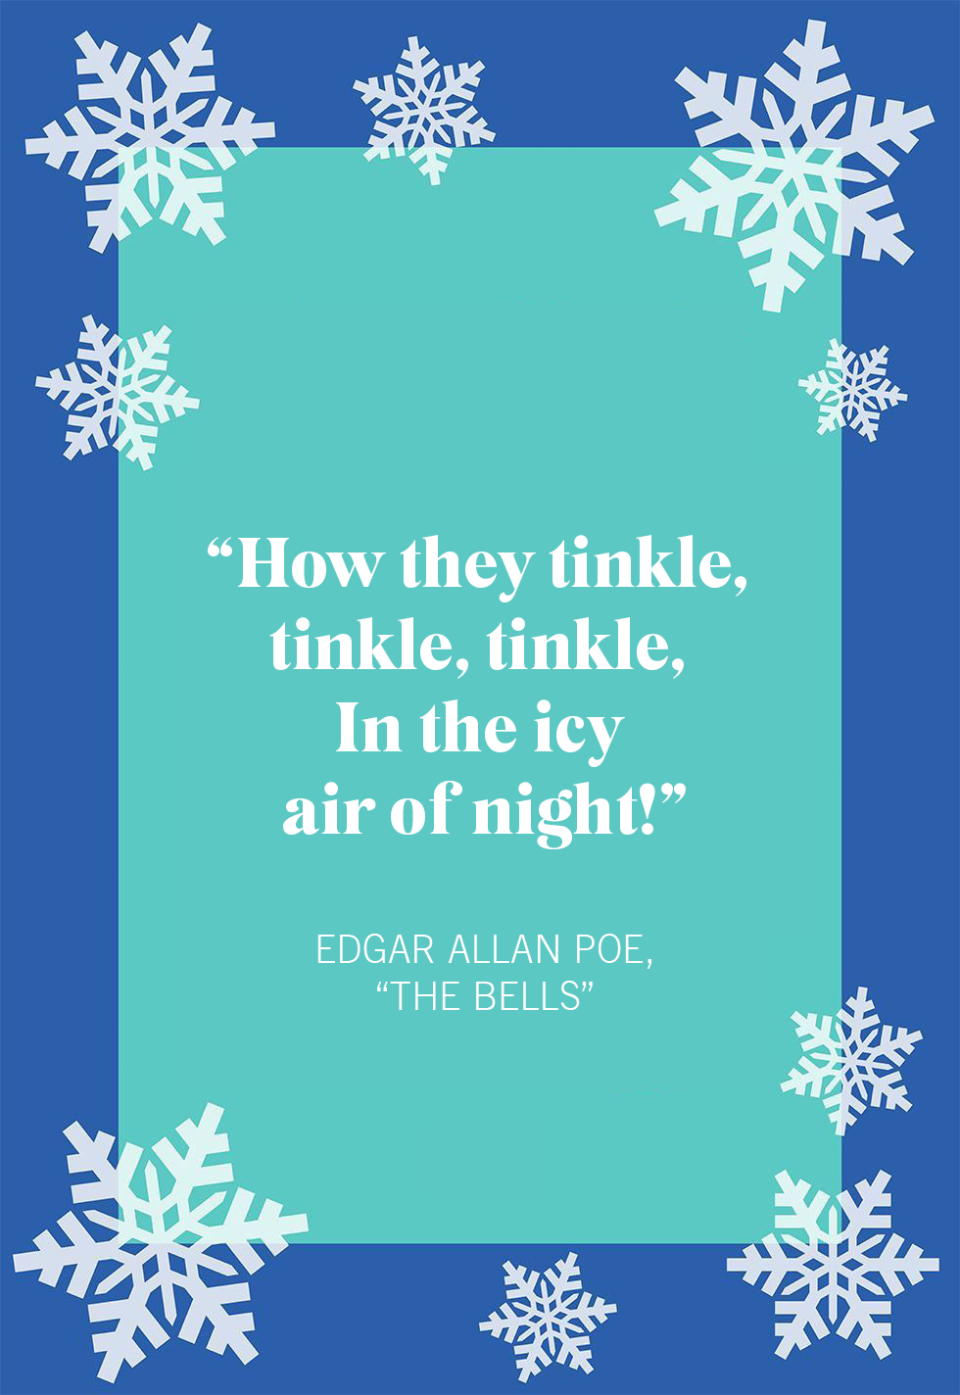 Edgar Allan Poe,  “The Bells”